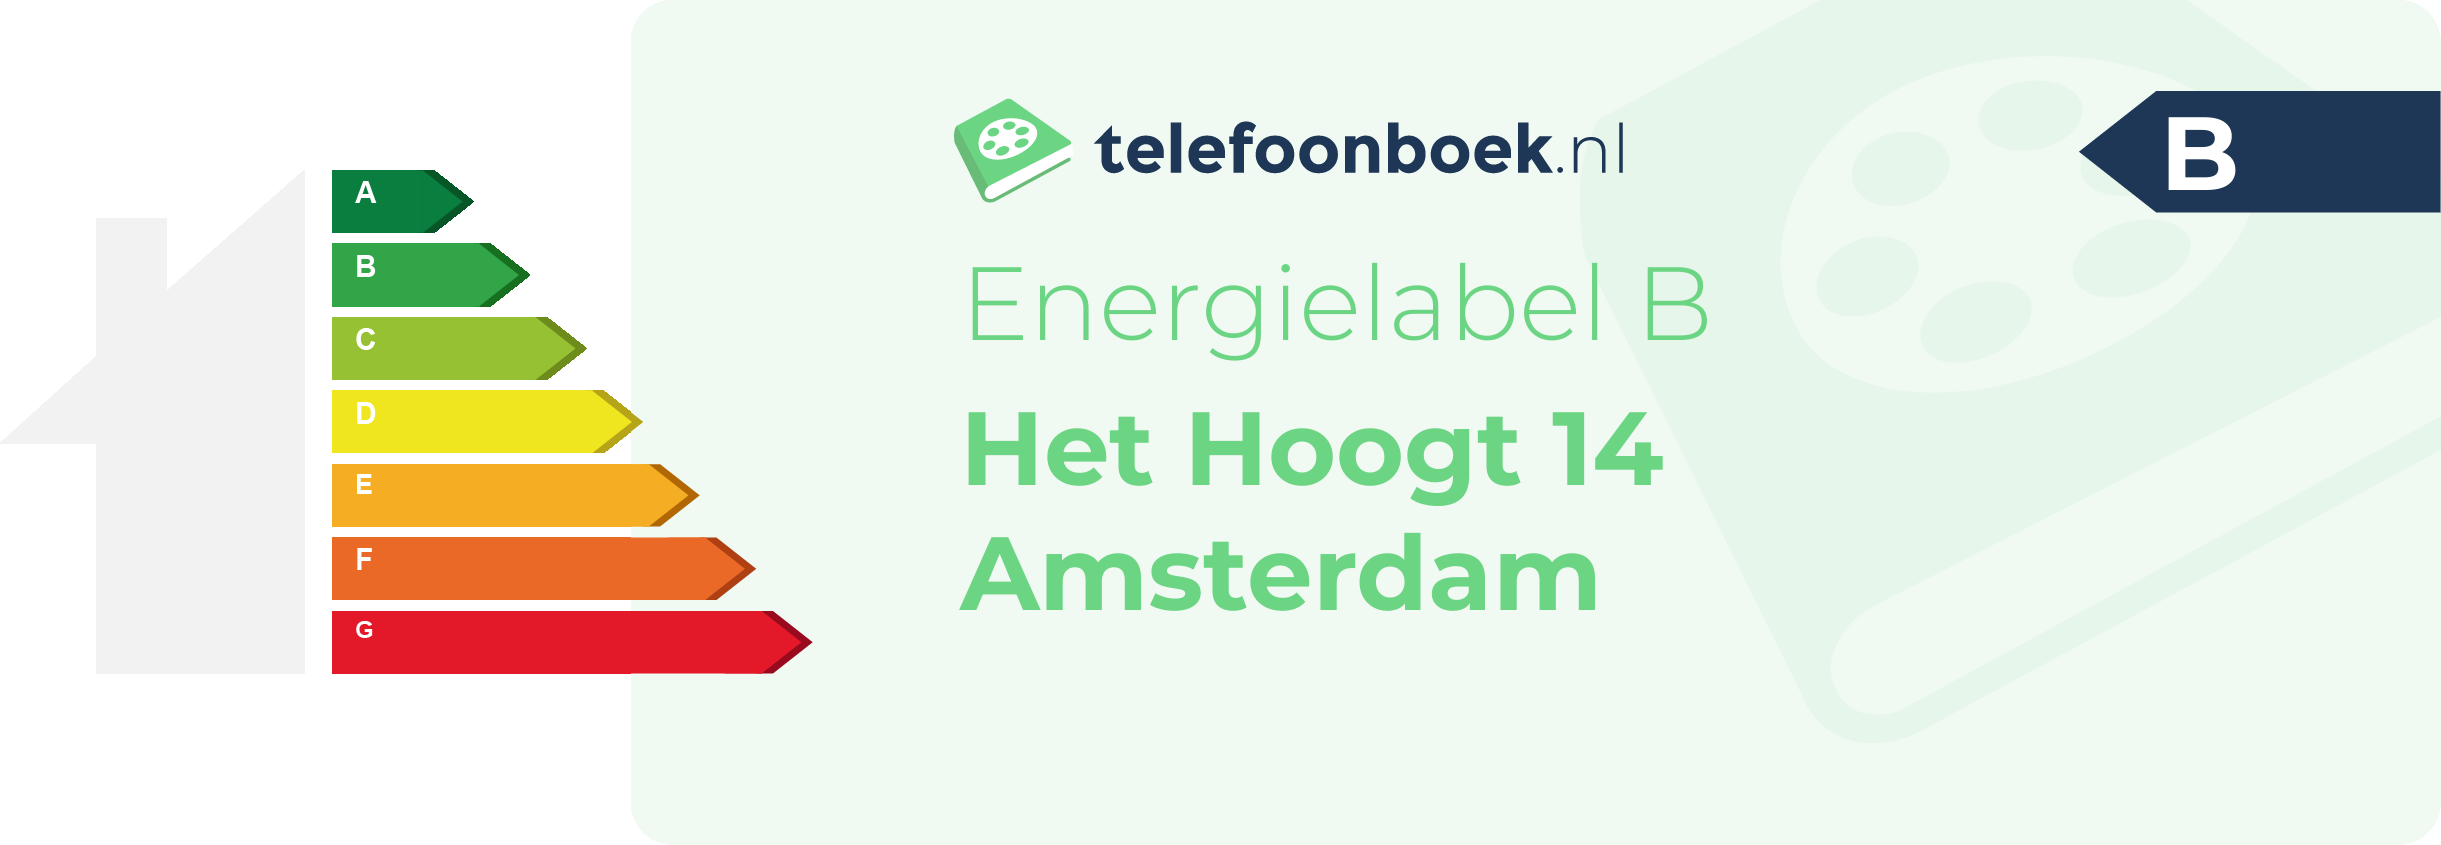 Energielabel Het Hoogt 14 Amsterdam